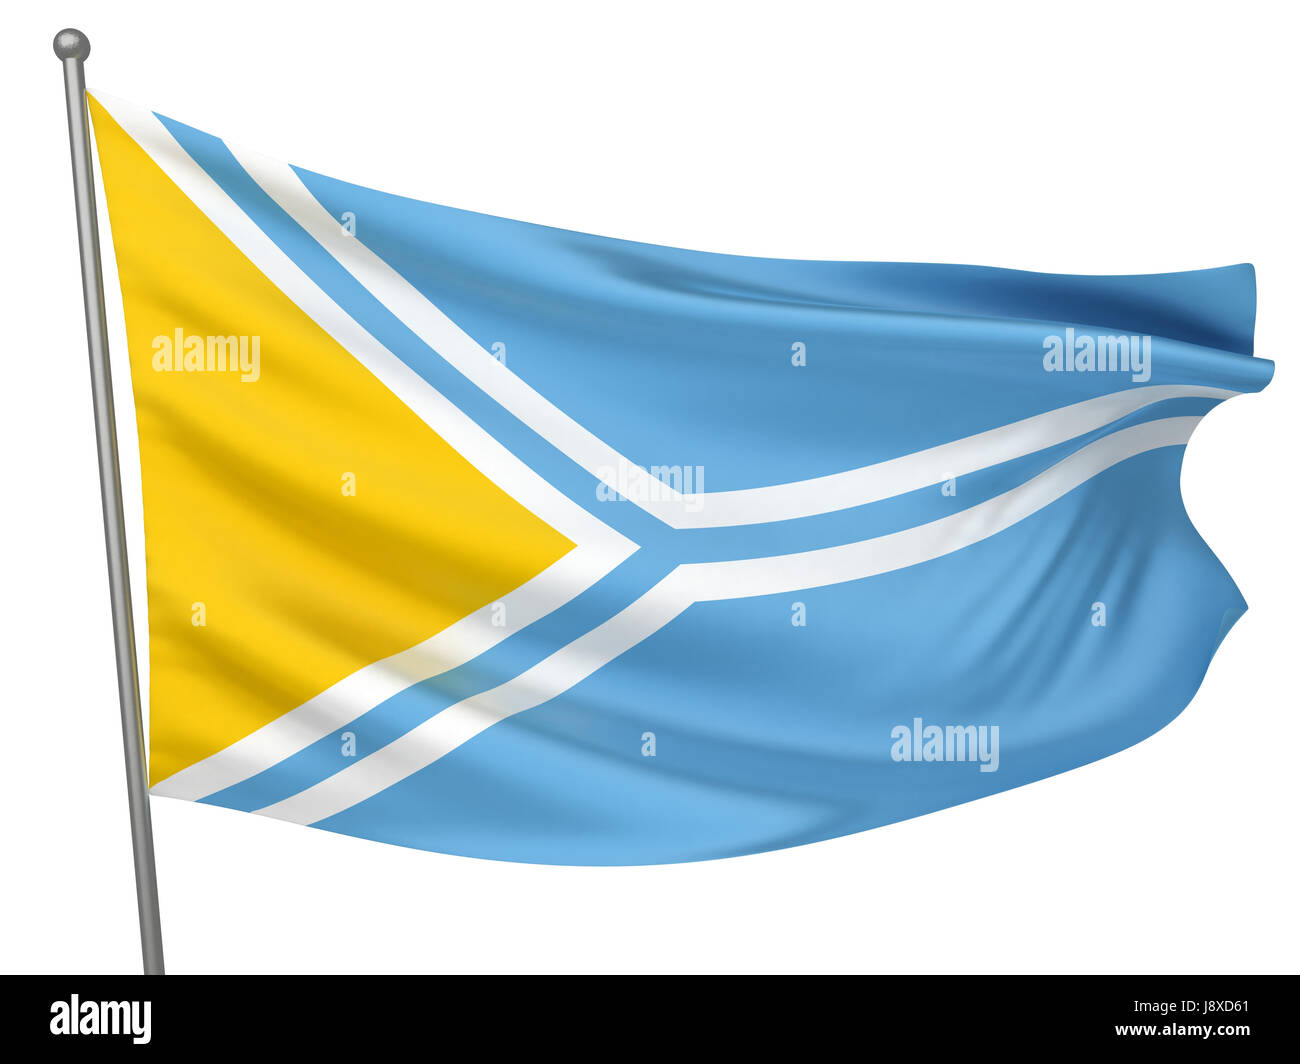 isolated, symbolic, colour, emblem, illustration, flag, banner, country, Stock Photo